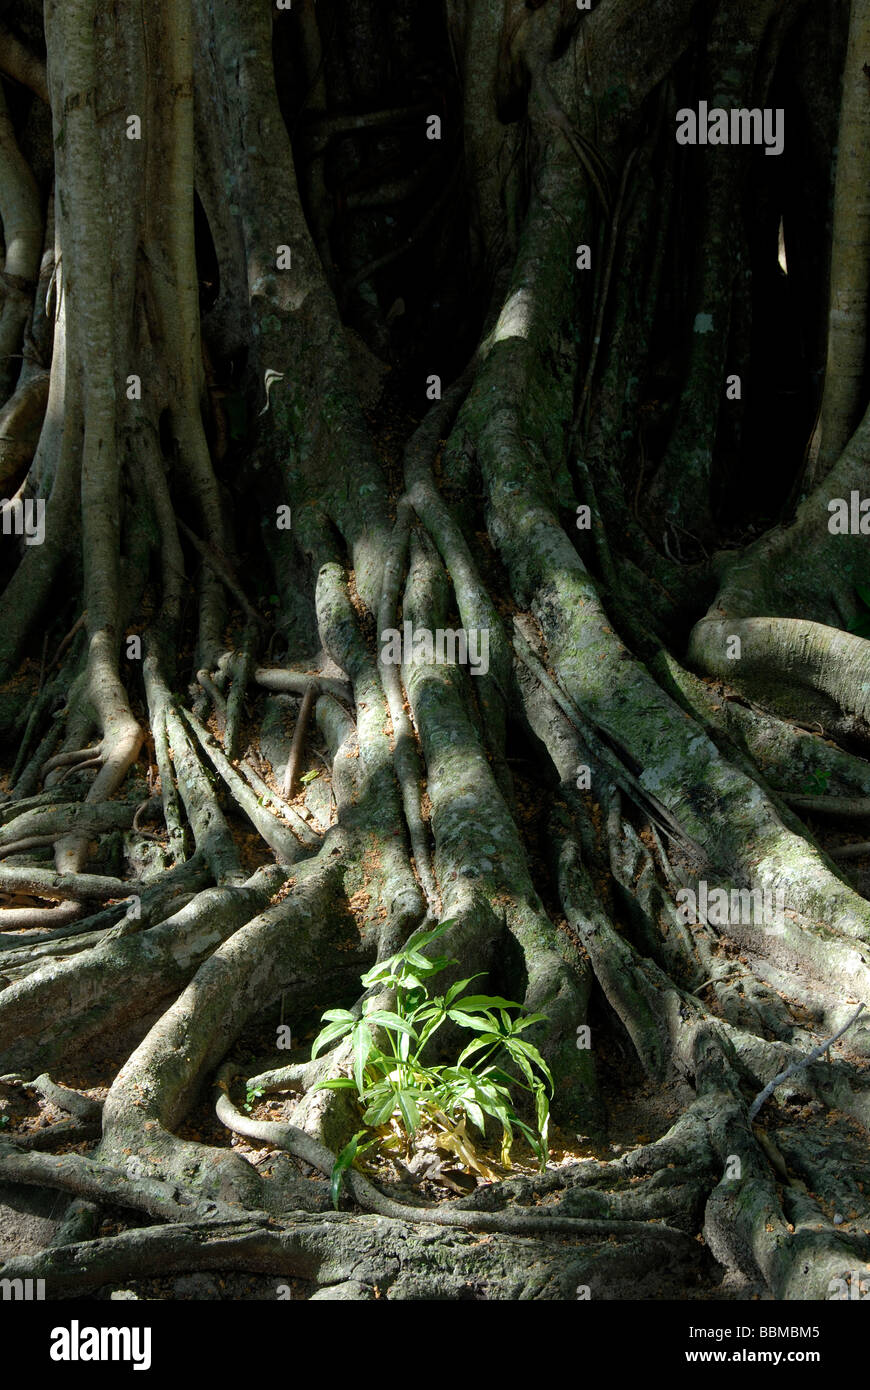 Enorme tronco de árbol ramificado con raíces aéreas, pequeña planta sagrada, higuera (Ficus religiosa), Talalla cerca Dondra, Océano Índico, Ceylo Foto de stock